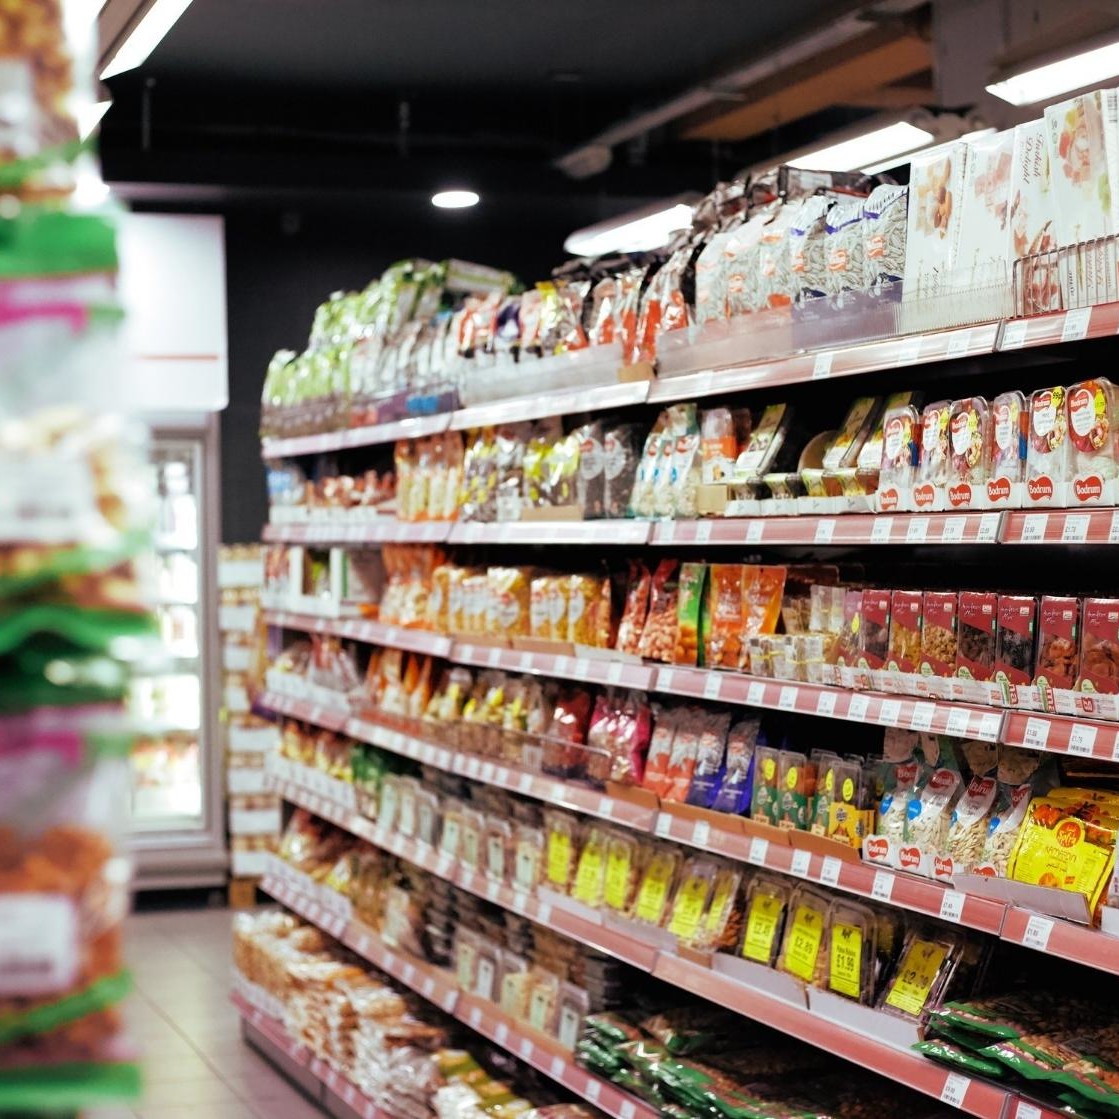 refrigeration health in Supermarkets and Hypermarkets